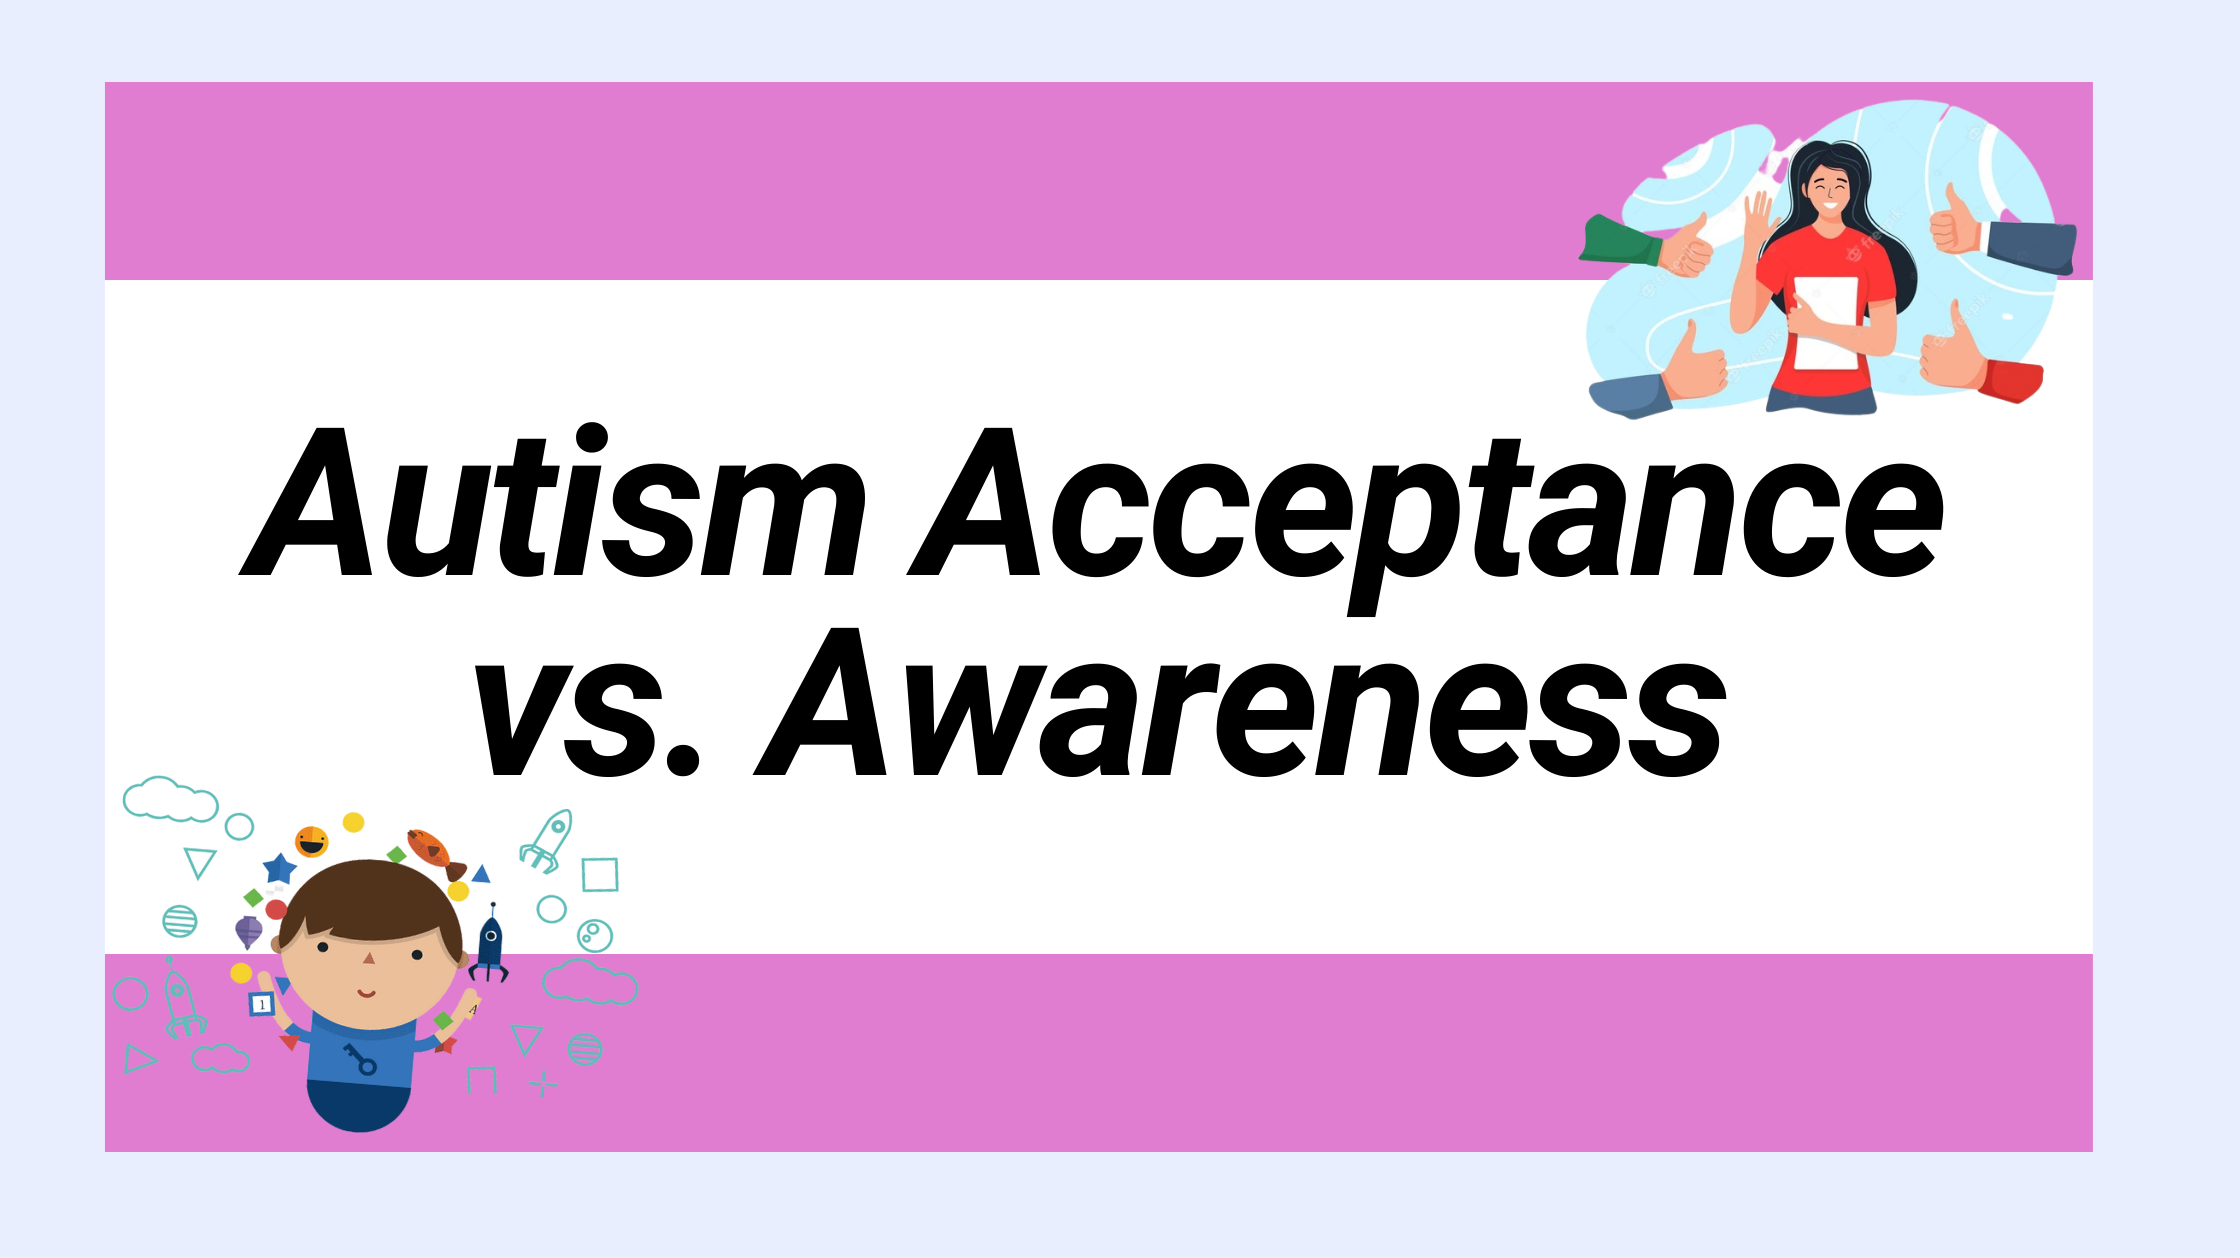 Autism Acceptance vs. Awareness